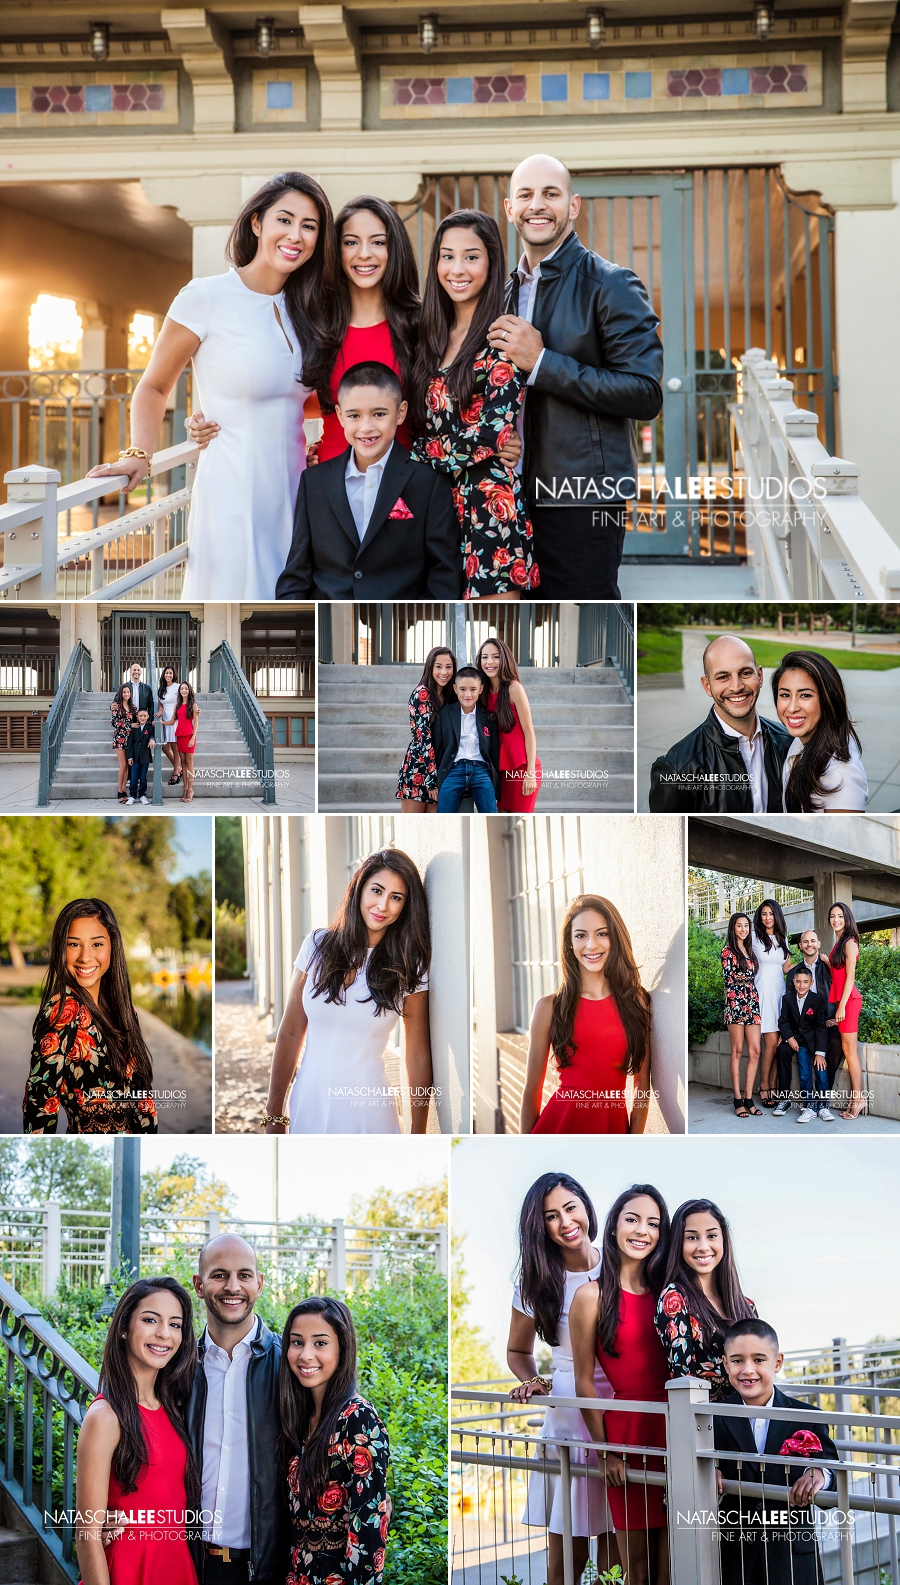 Denver Family Portraits - Stylish Urban Photos at Washington Park - Client Interview 